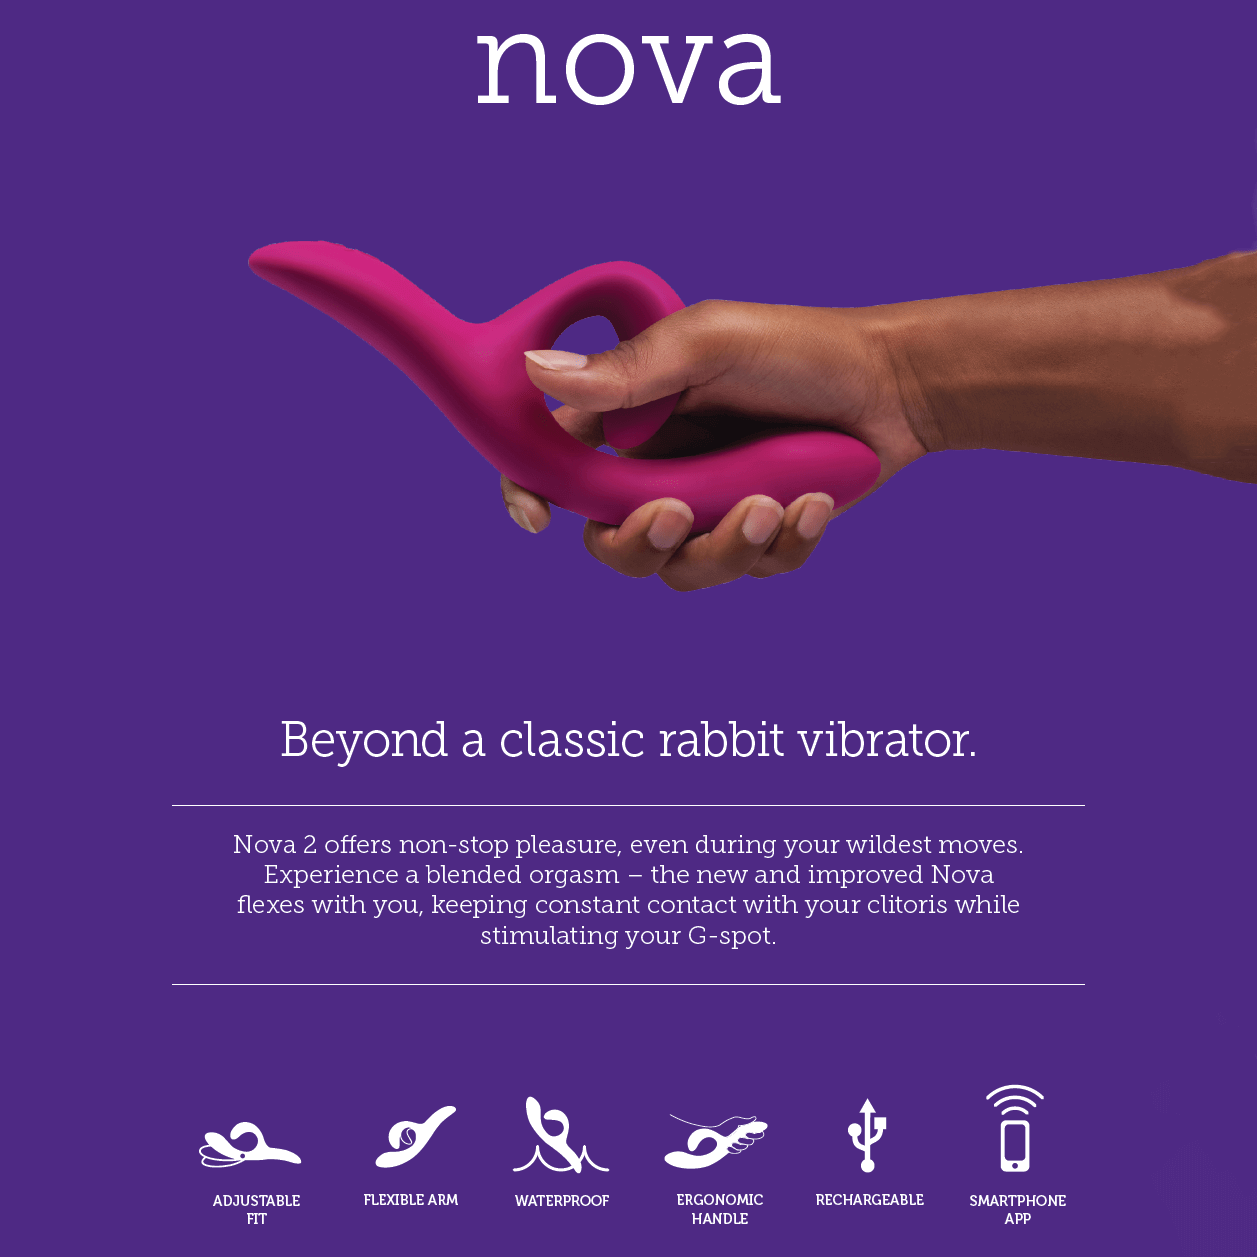 We-Vibe Nova 2 - Beyond a Classic Rabbit Vibrator - Thorn & Feather